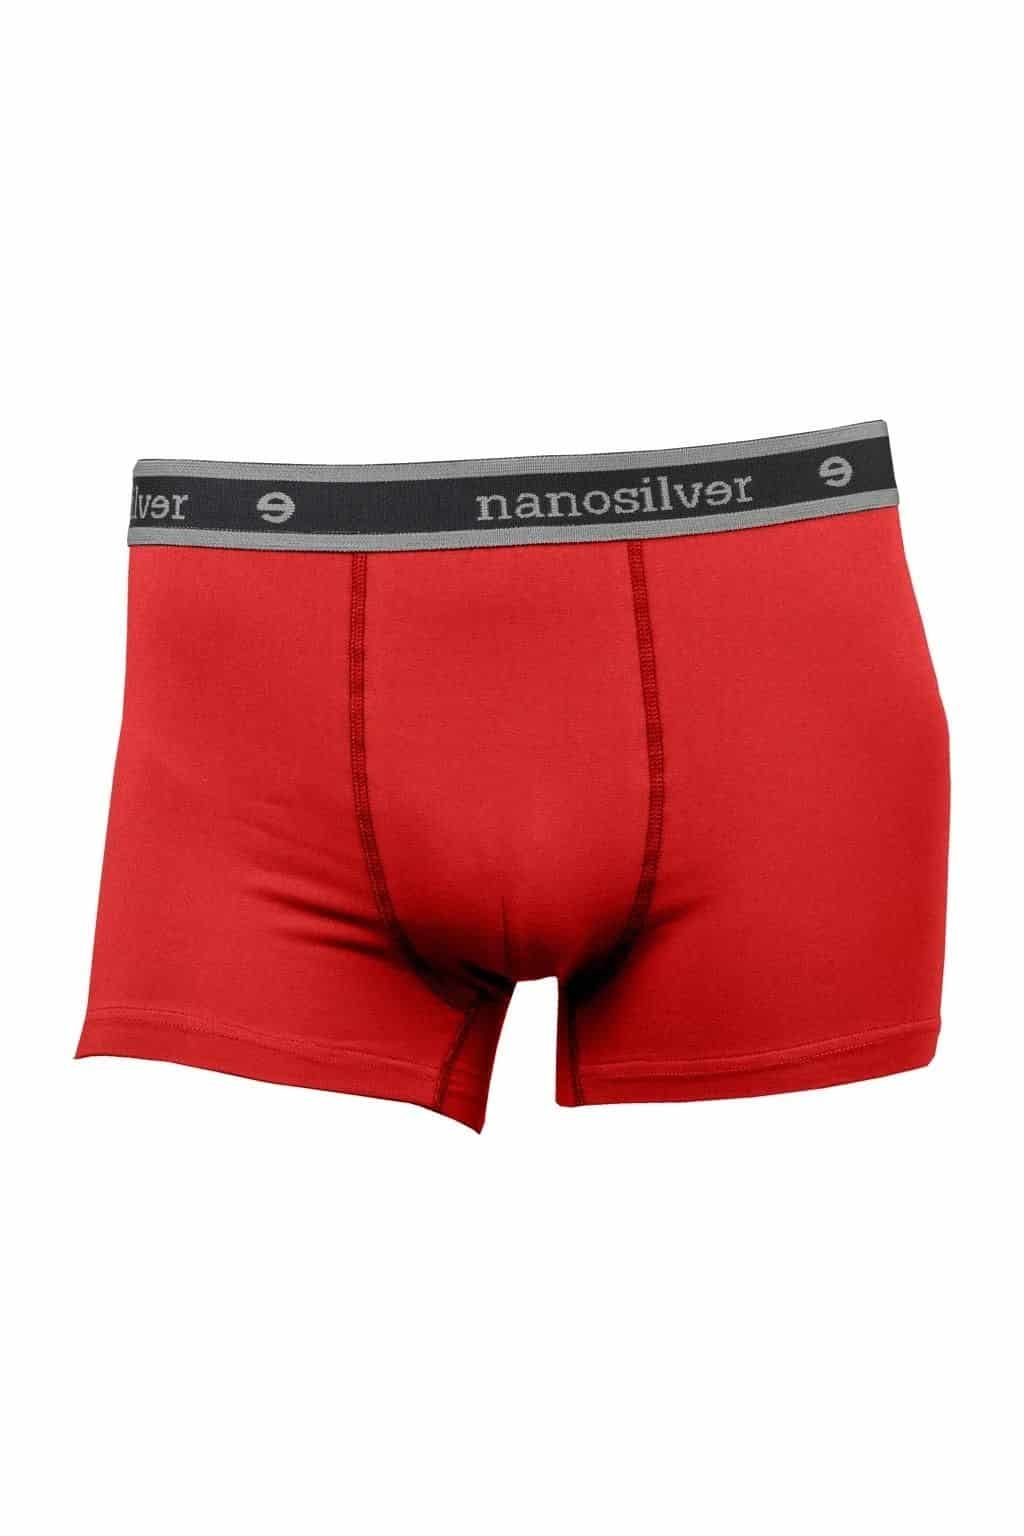 nanosilver® Nano boxerky s gumou nanosilver bez zadního švu – červené Velikost: XL